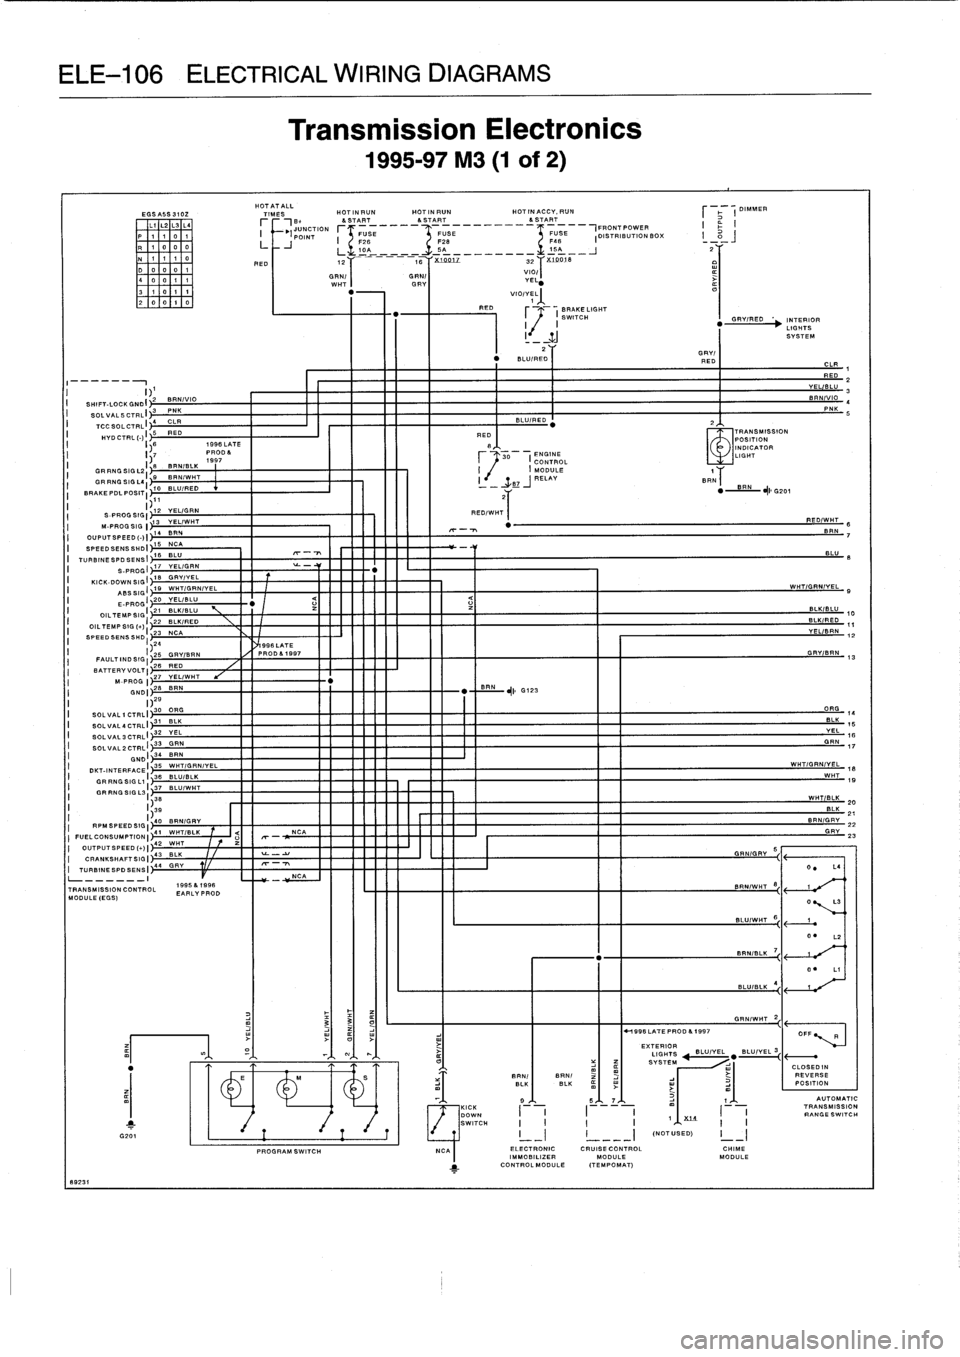 BMW 318i 1997 E36 Manual PDF 
ELE-106
ELECTRICAL
WIRING
DIAGRAMS

8923
1

EGSASS
3102
LlL2L3L4P
11
0
1
q
1
000N
111
0
D
D
0
0
1
40
011
3
1
0
77
200
1
0

Transmission
Electronics

1995-97
M3
(1
of
2)

HOTATALL
TIMES
HOTINRUNHOTINR